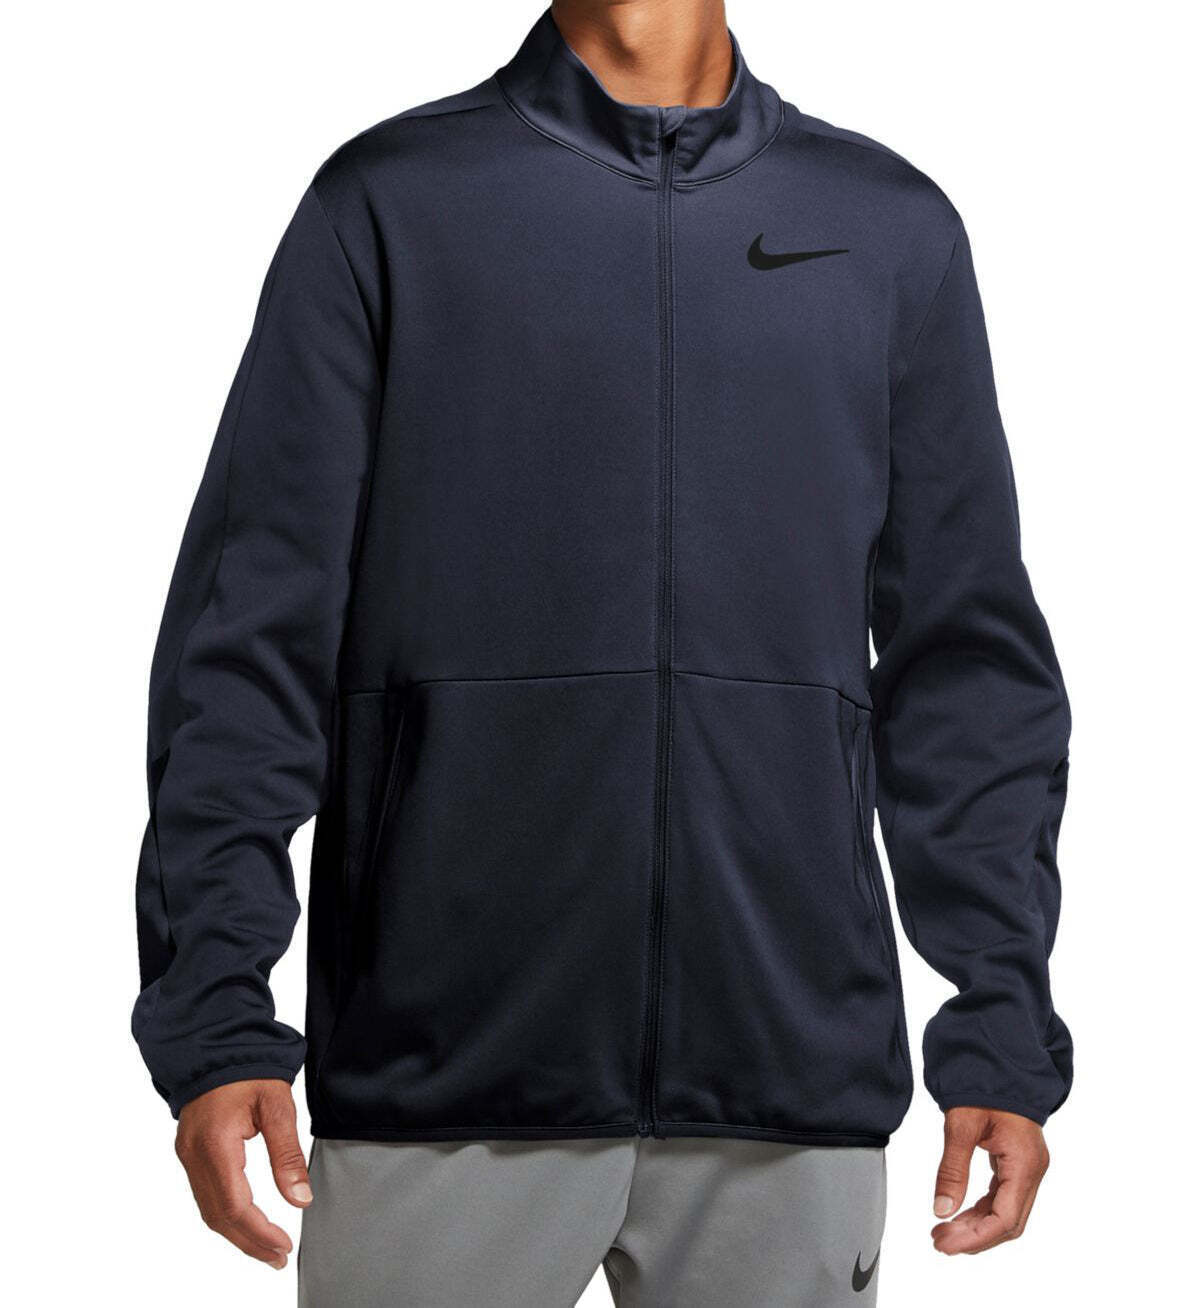 Primary image for Nike Mens Epic Knit Training Jacket Size Medium Color Obsidian